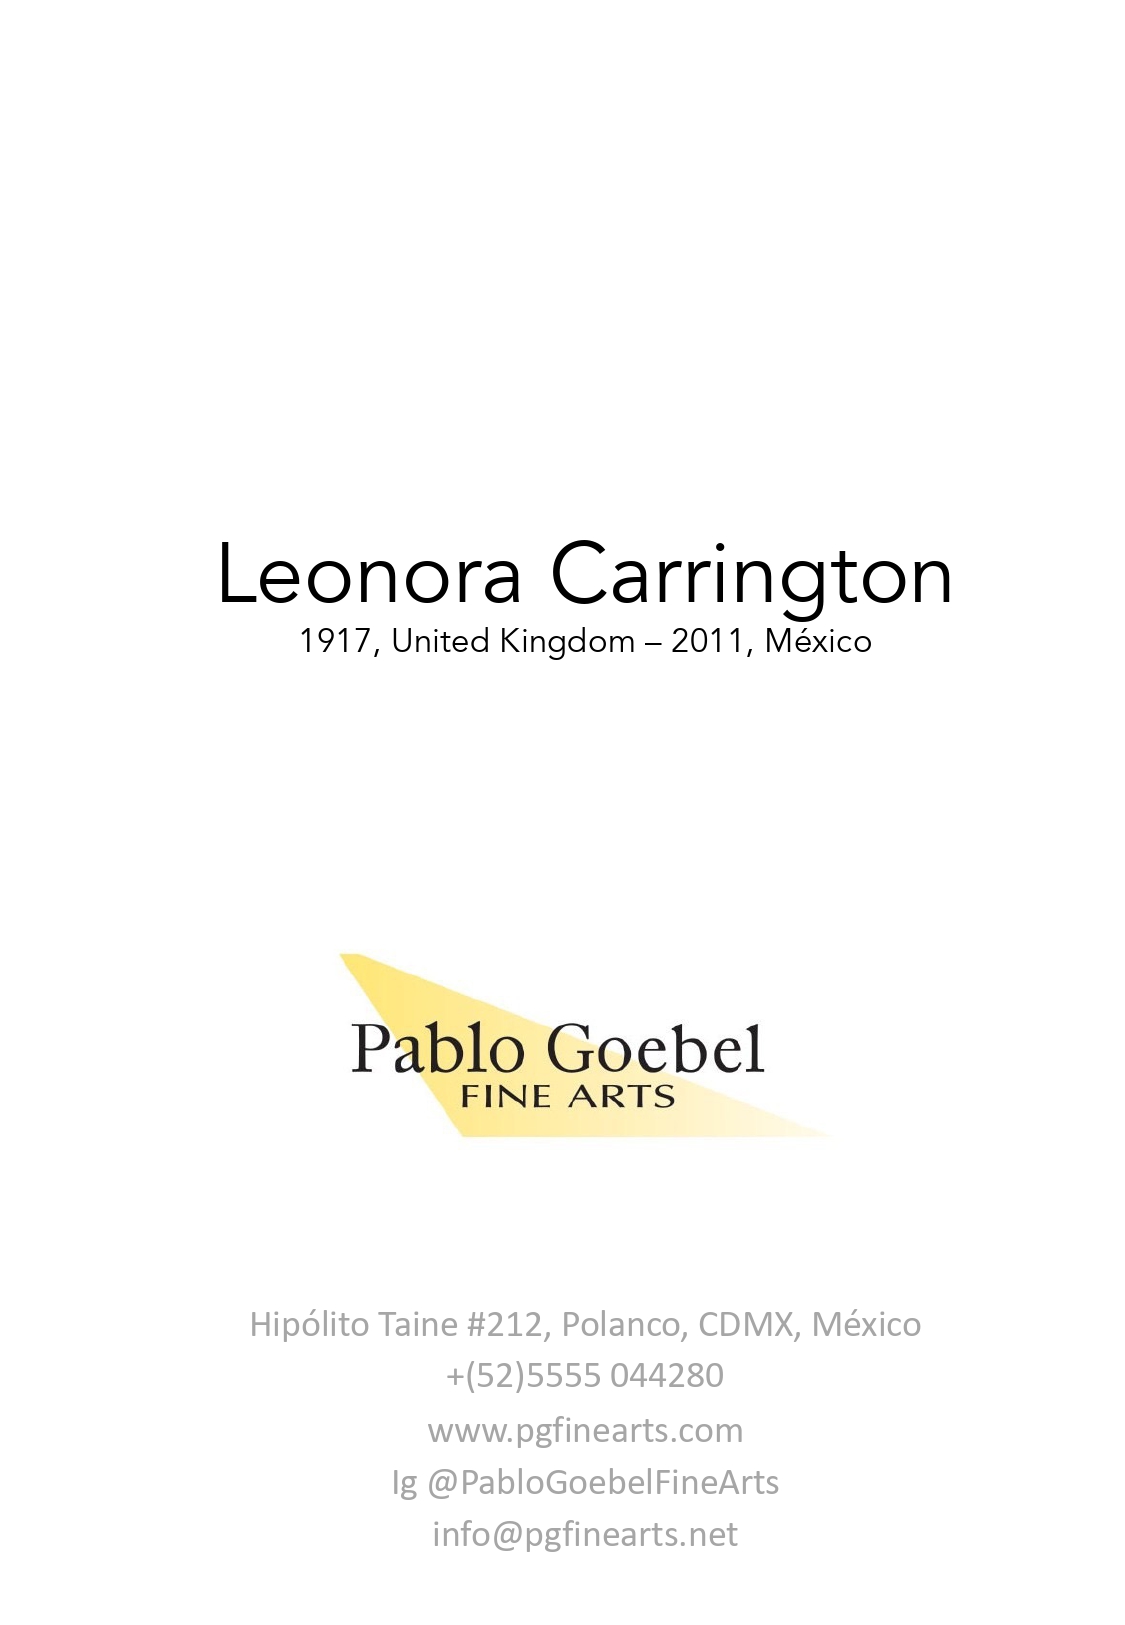 Leonora Carrington 1917, United Kingdom - 2011 México